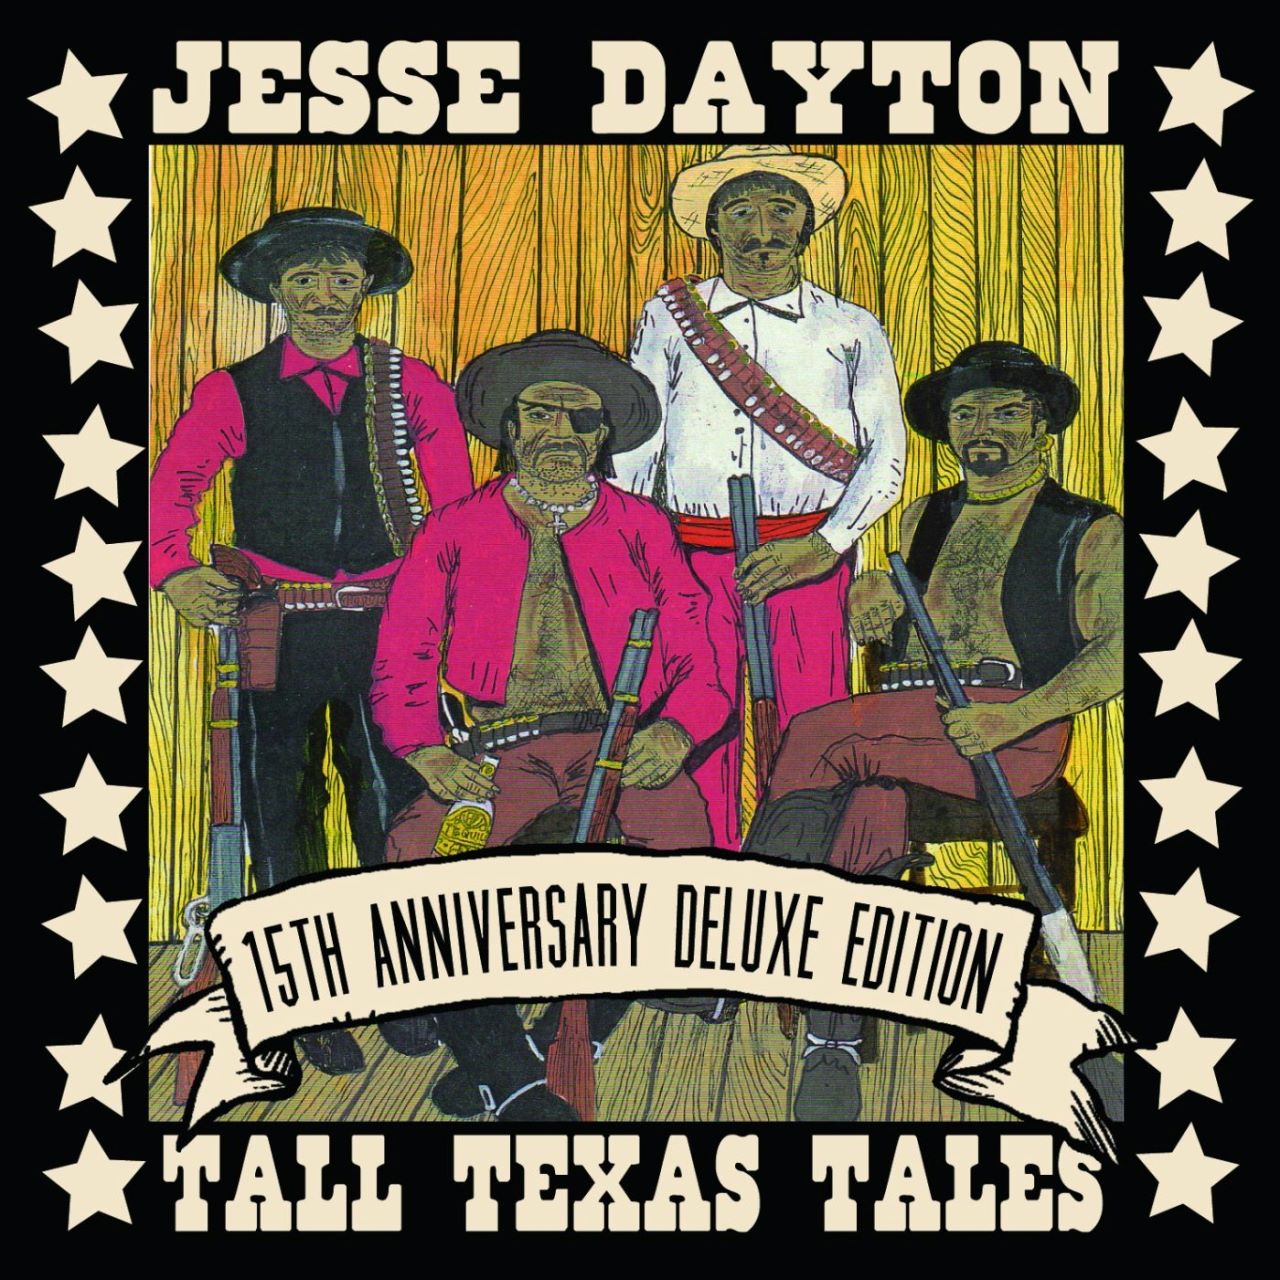 Jesse Dayton - Tall Texas Tales cover album